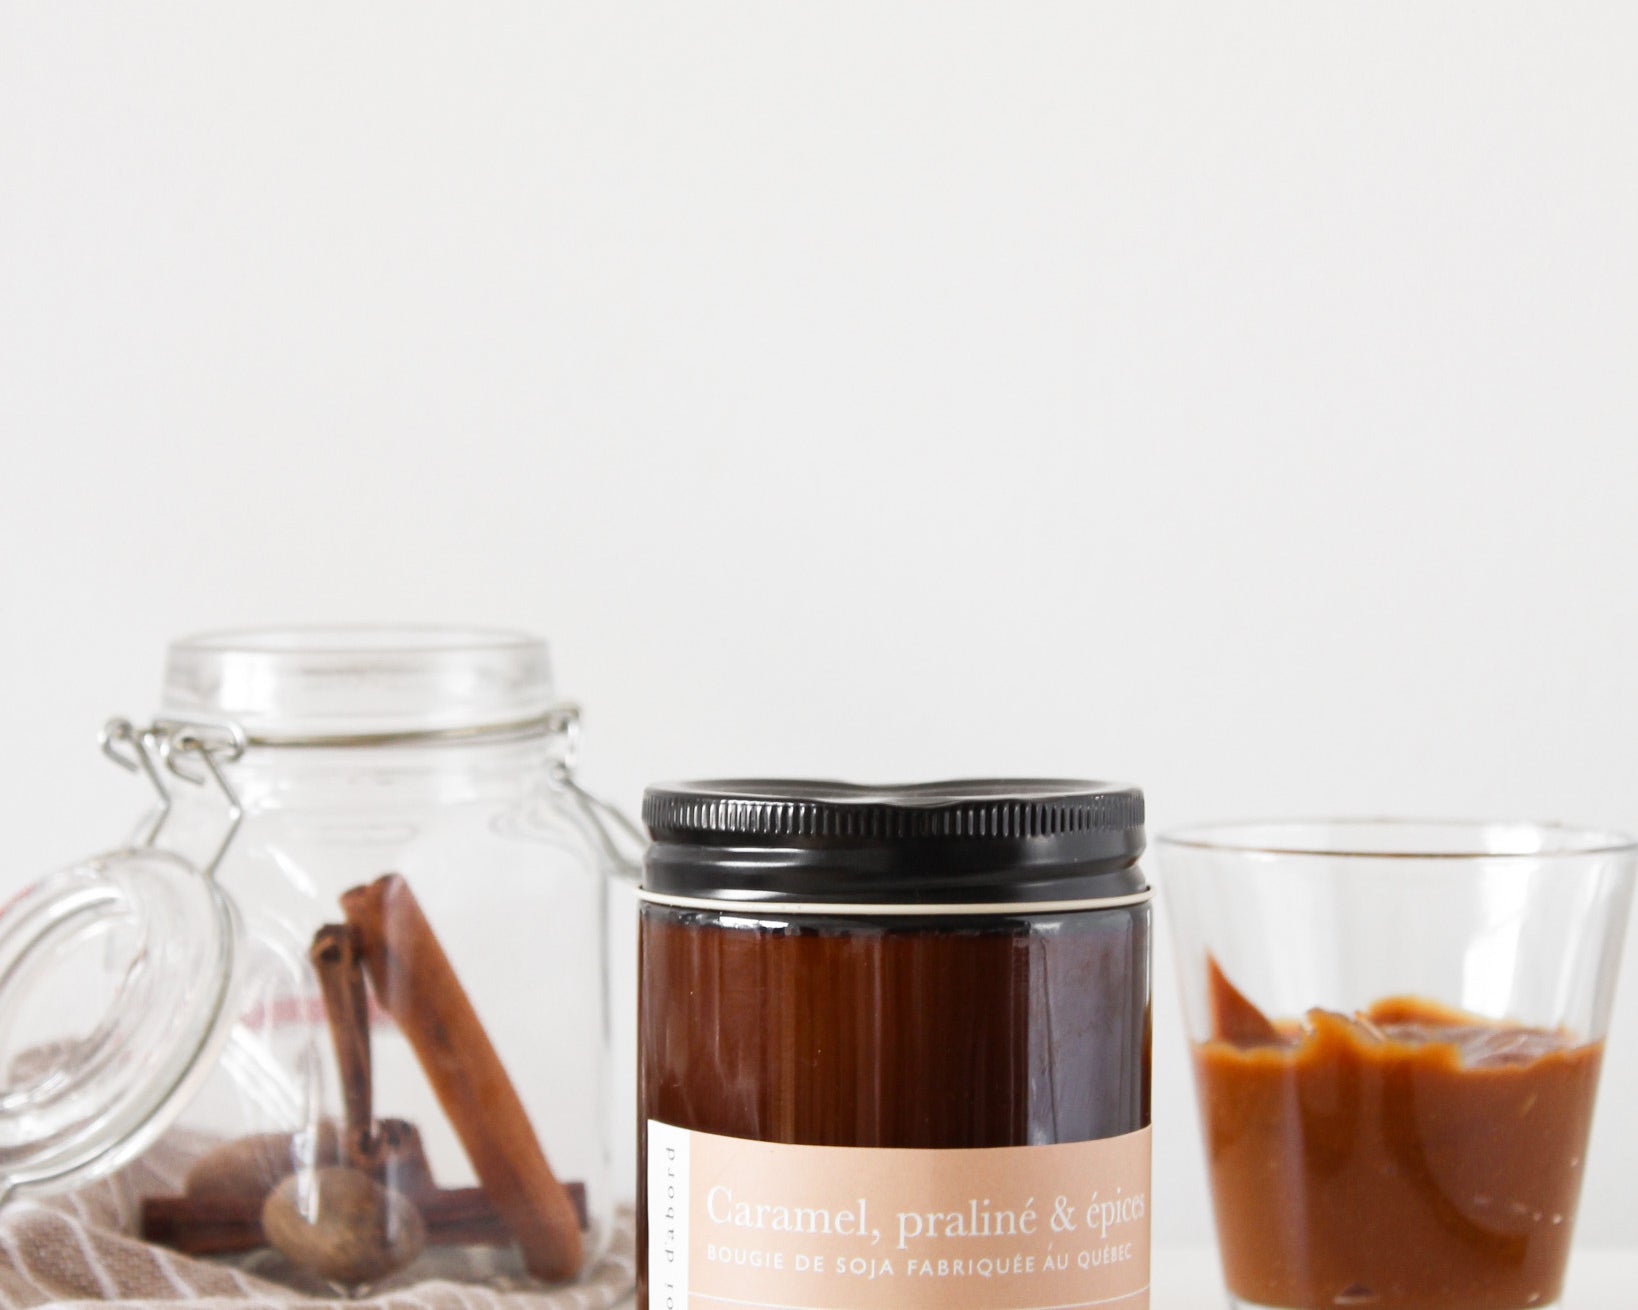 Bougie de soja – Caramel, praliné & épices